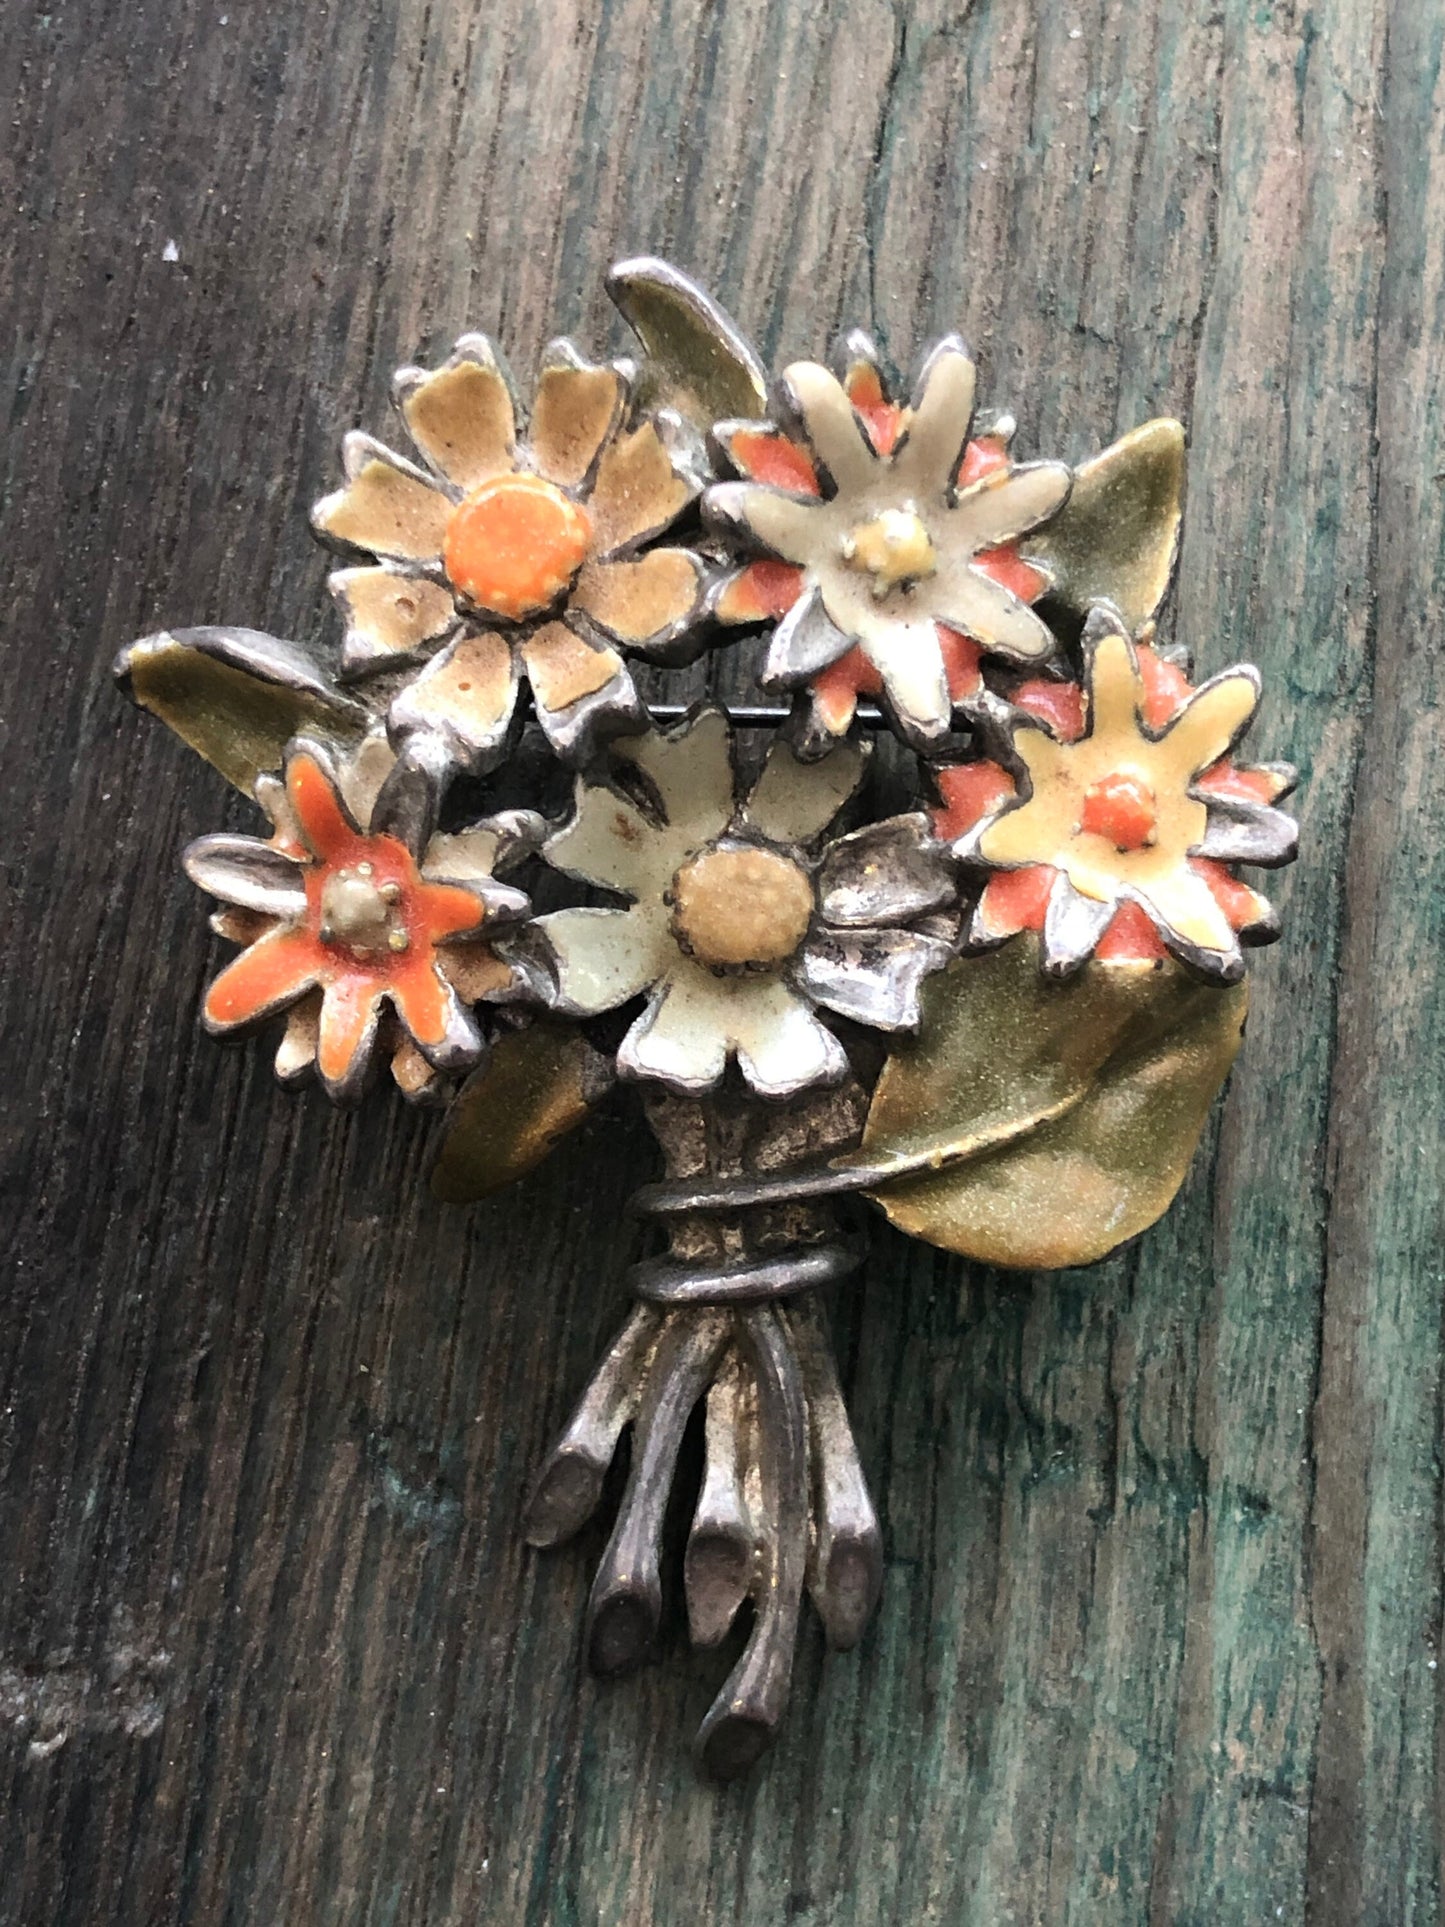 SALE Vintage 1930's Enameled Pot Metal Flower Bunch Brooch